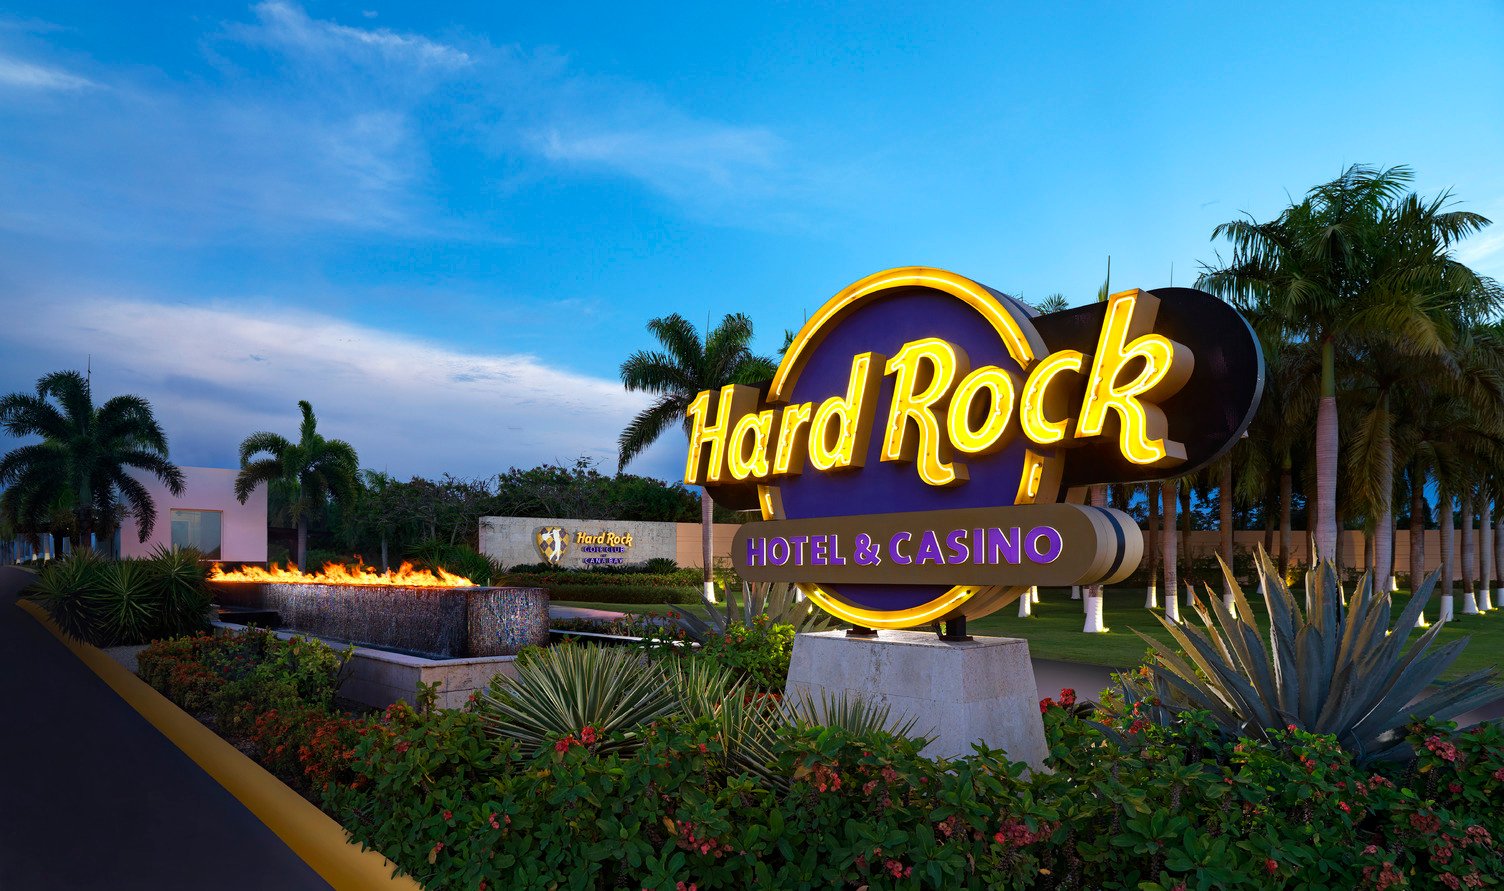 Hard Rock Hotel & Casino Punta Cana anuncia shows e espetáculos para 2020